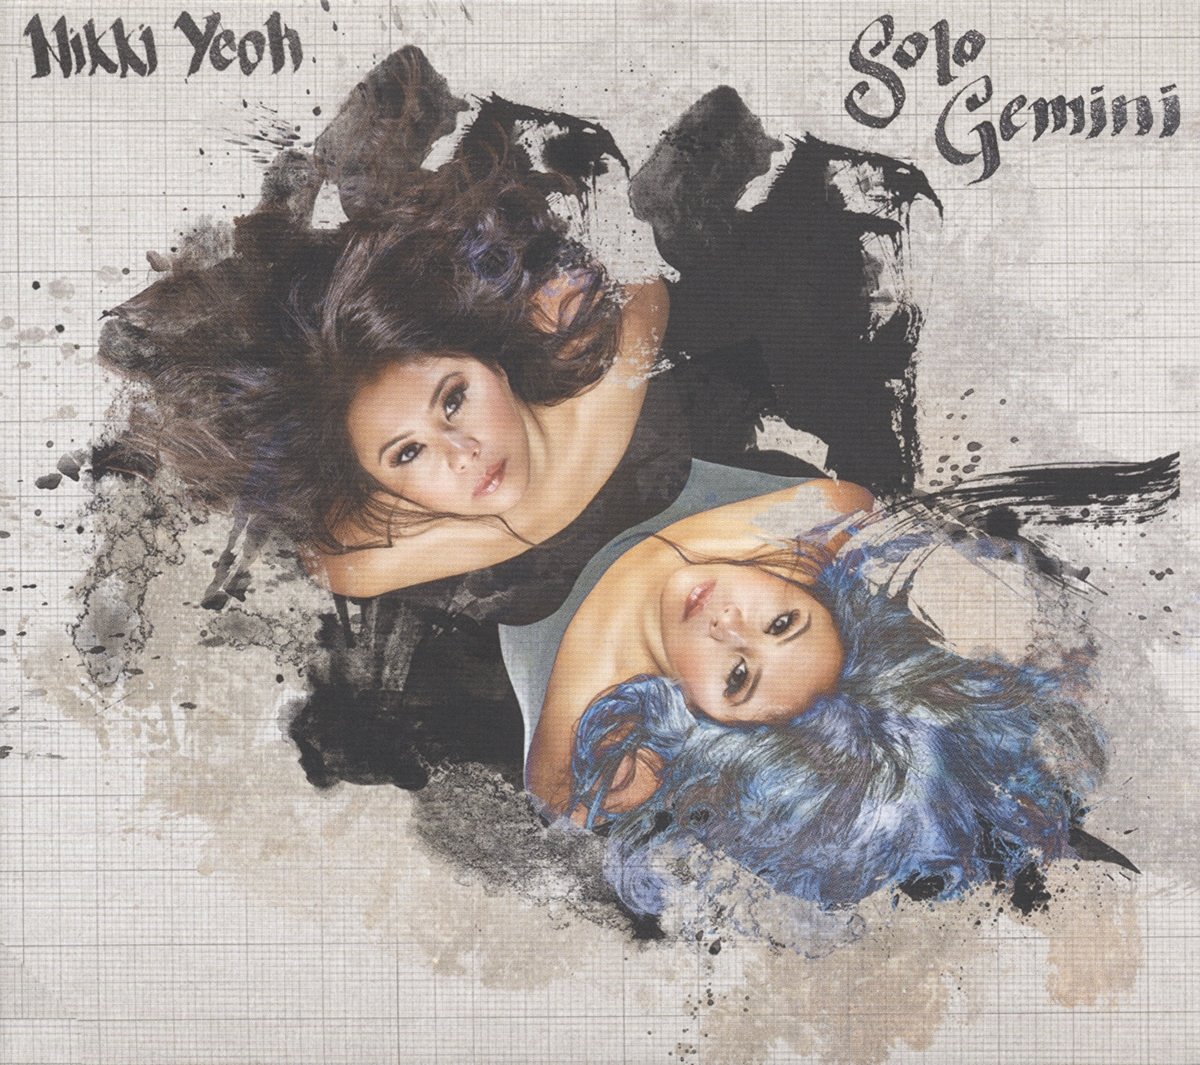 NIKKI YEOH - Solo Gemini cover 